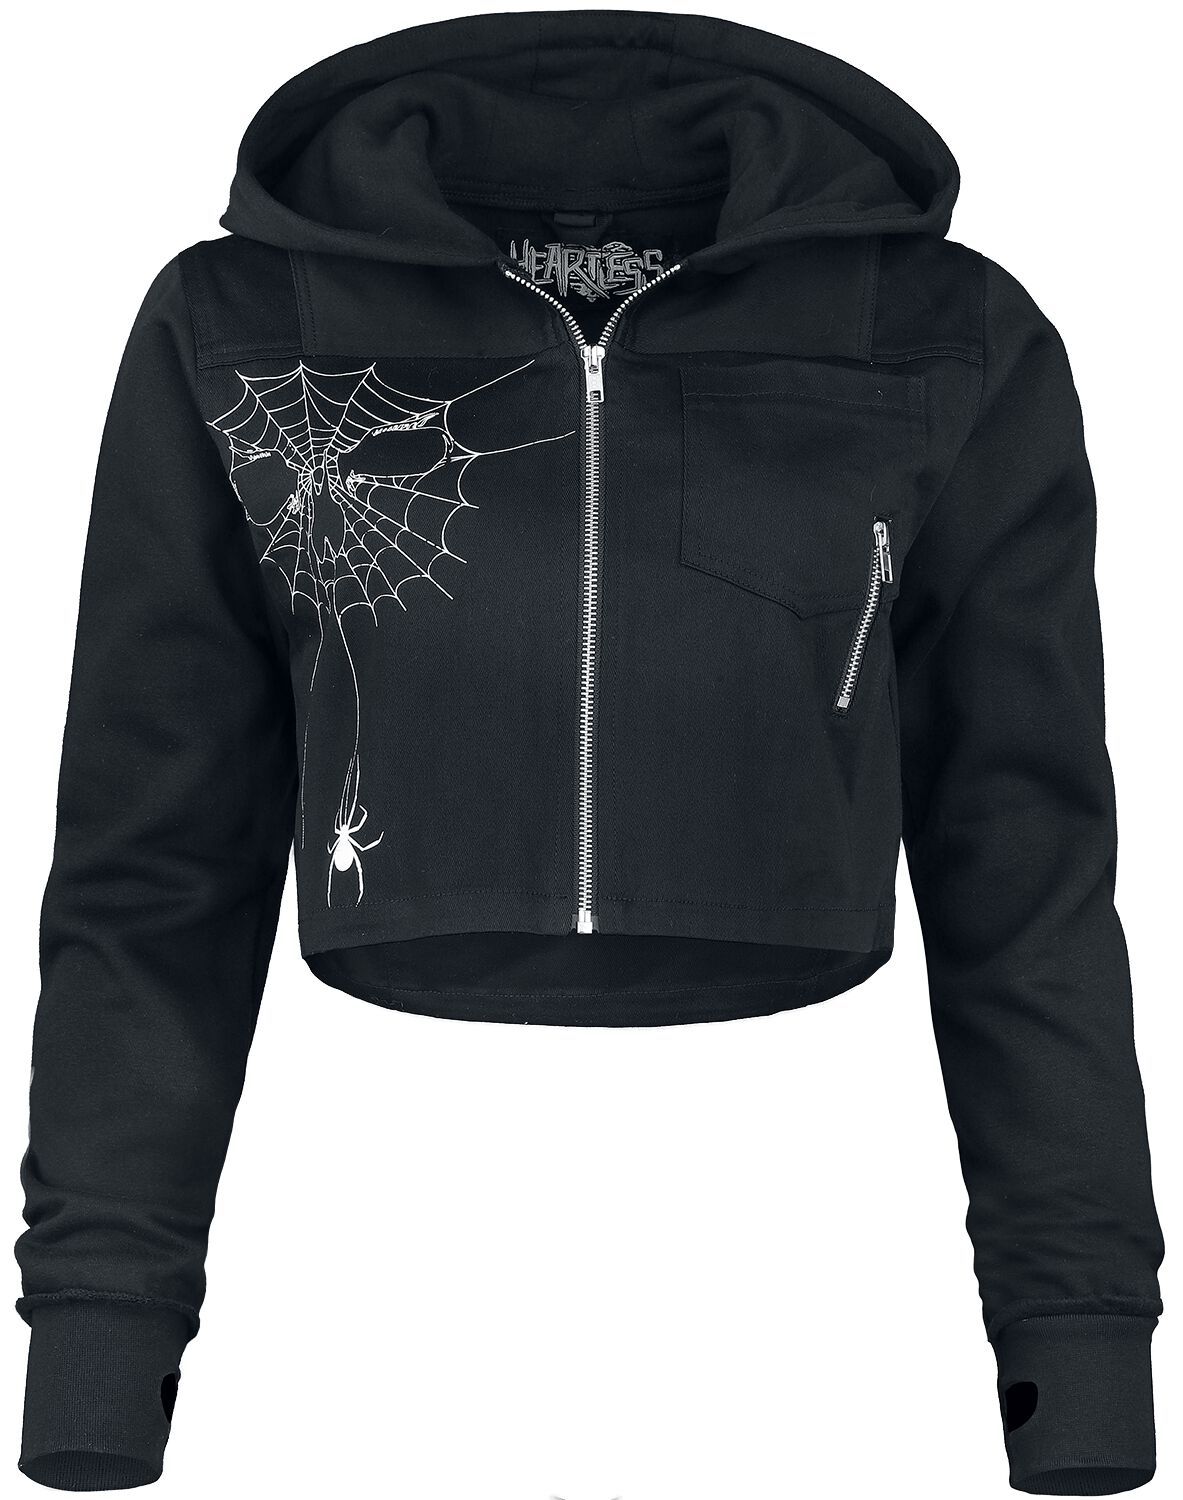 Image of Felpa jogging Gothic di Heartless - Widow Maker jacket - L a XL - Donna - nero